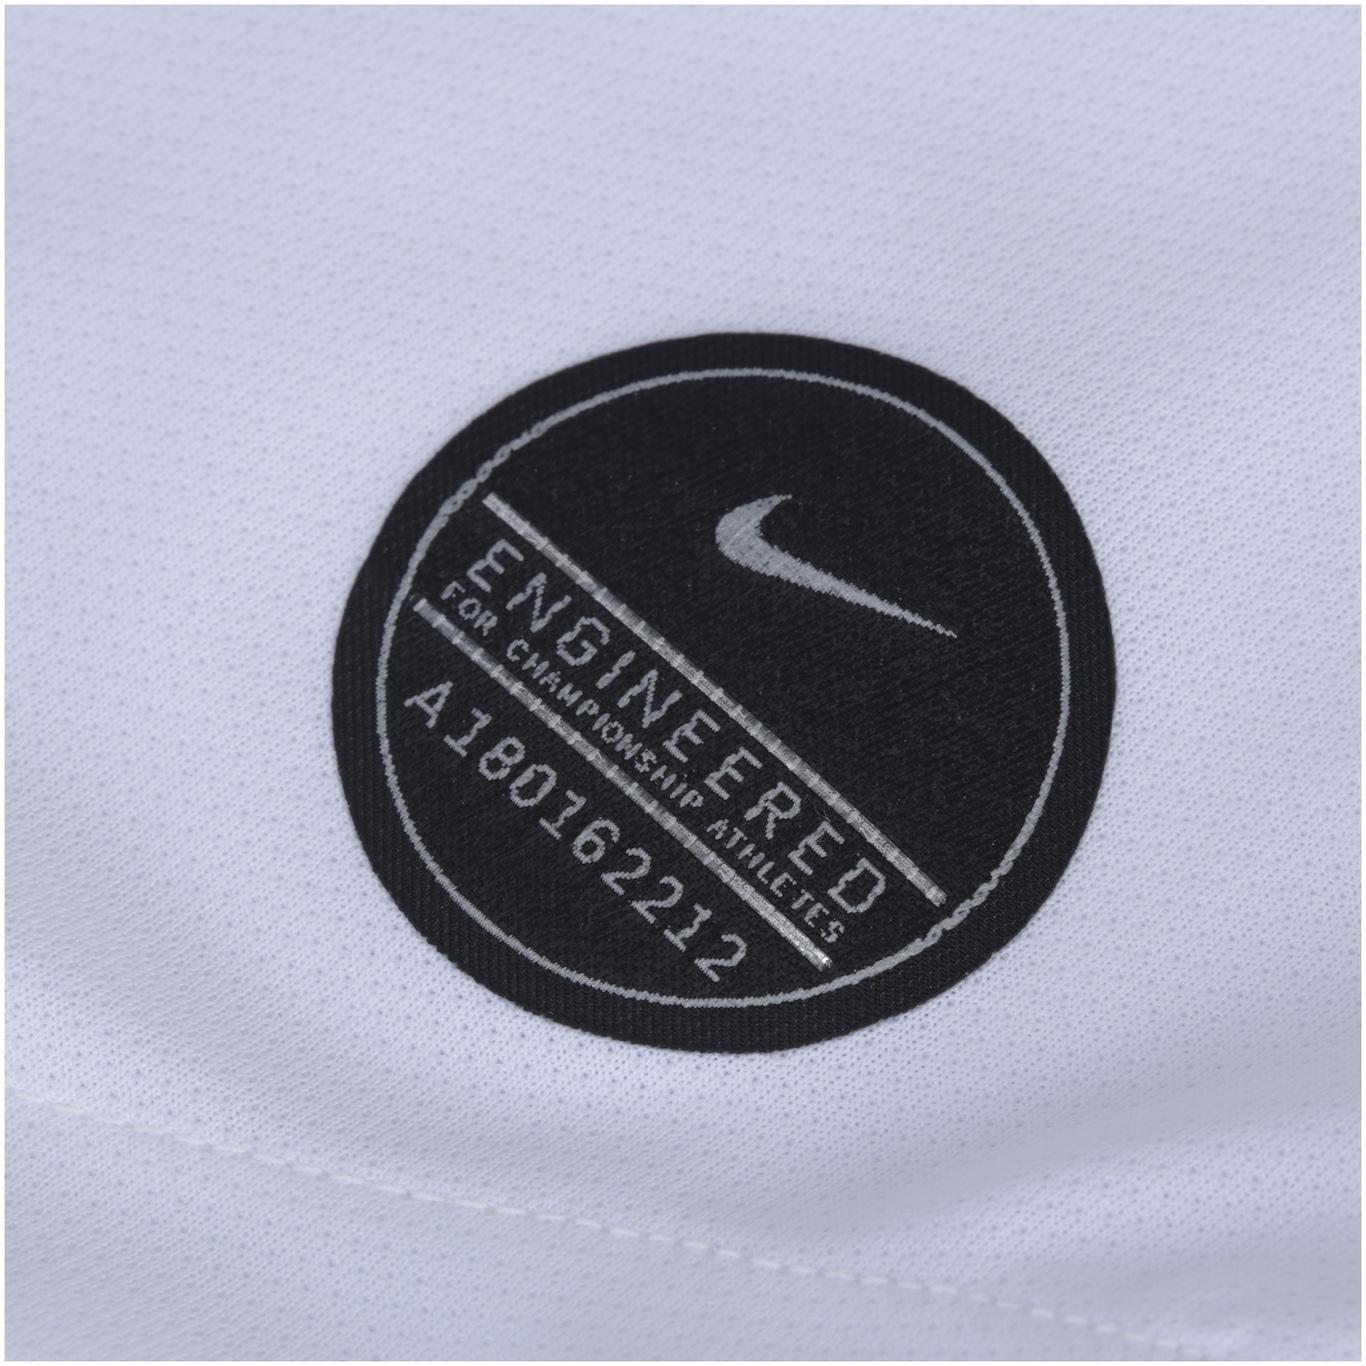 Nike Camisa Internacional Feminina 2019